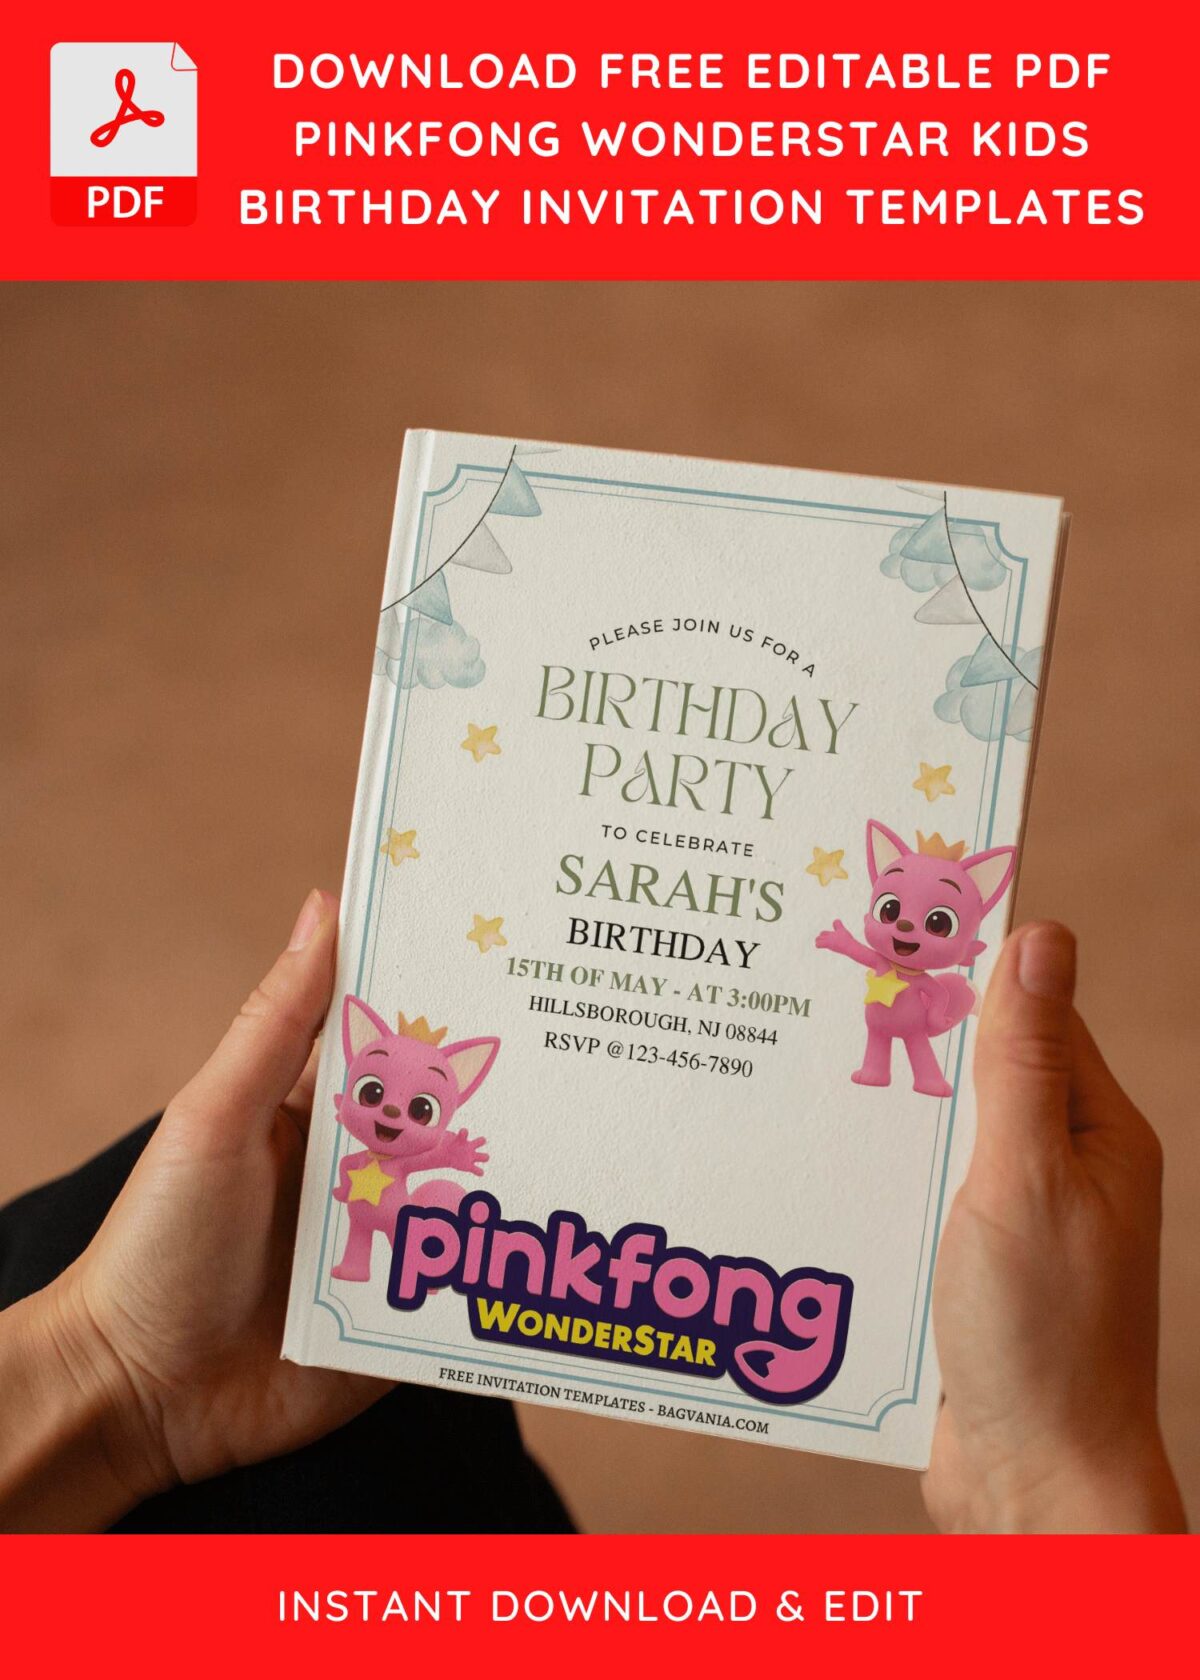 (Free Editable PDF) Adorable Pinkfong Wonderstar Kids Birthday Invitation Templates with editable text